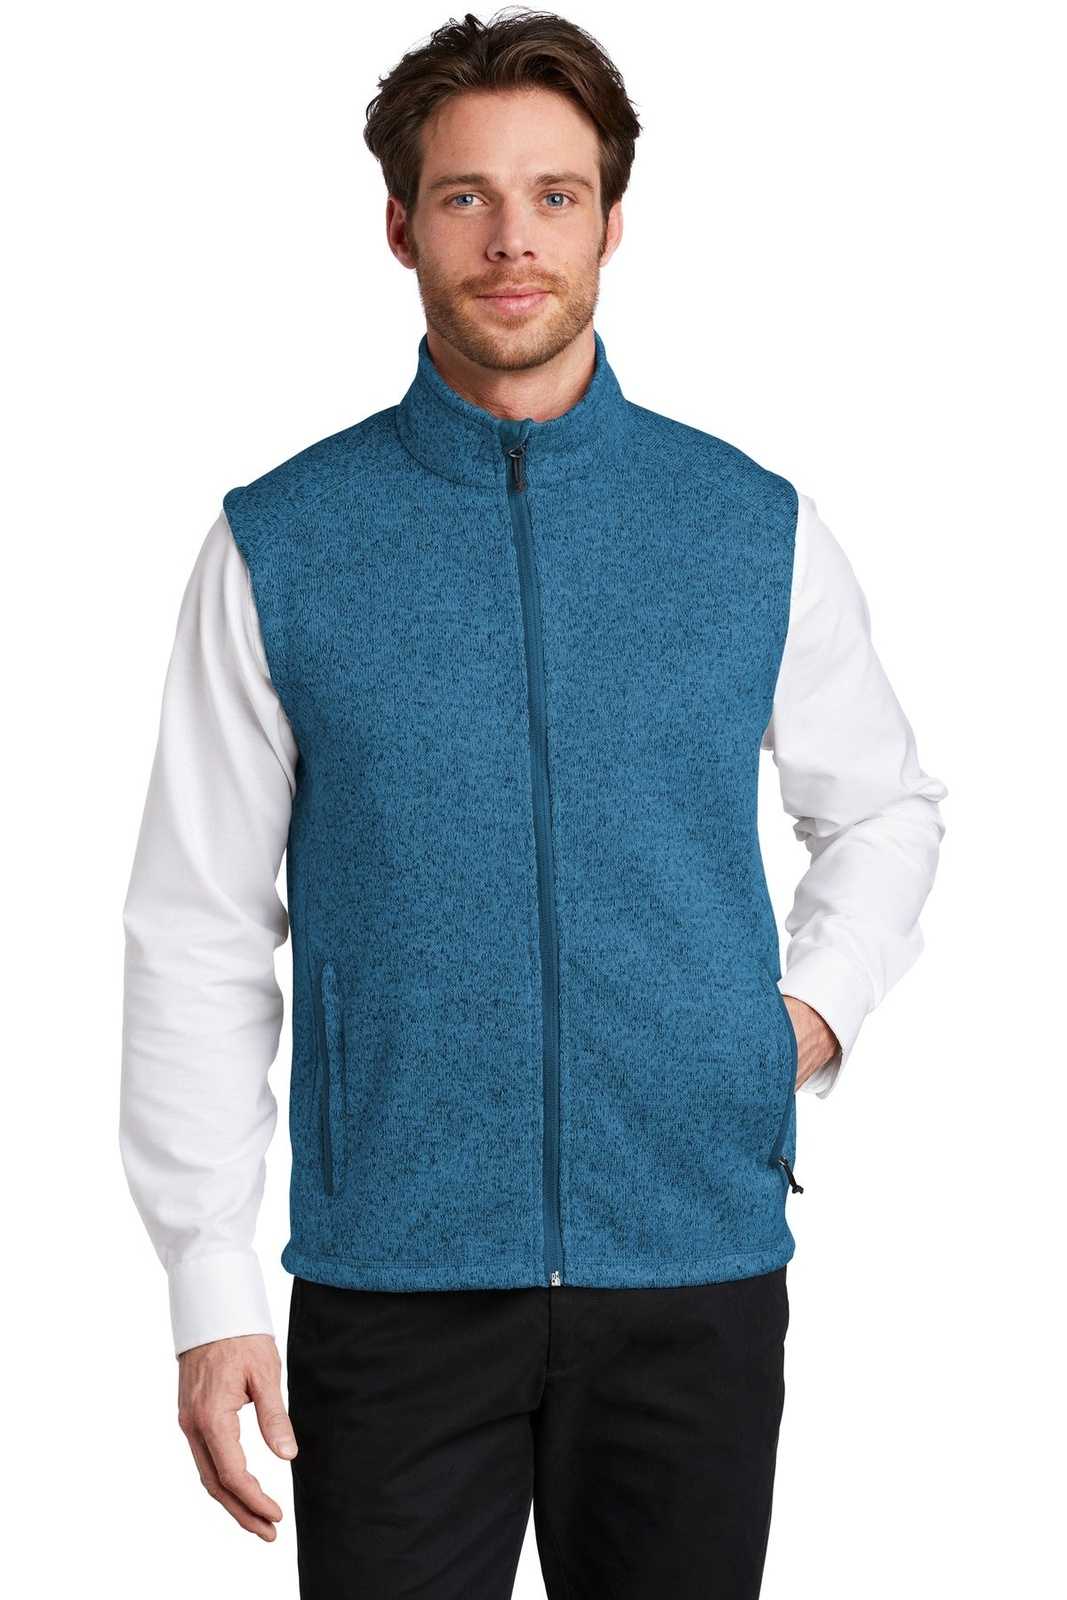 Port Authority F236 Sweater Fleece Vest - Medium Blue Heather - HIT a Double - 1